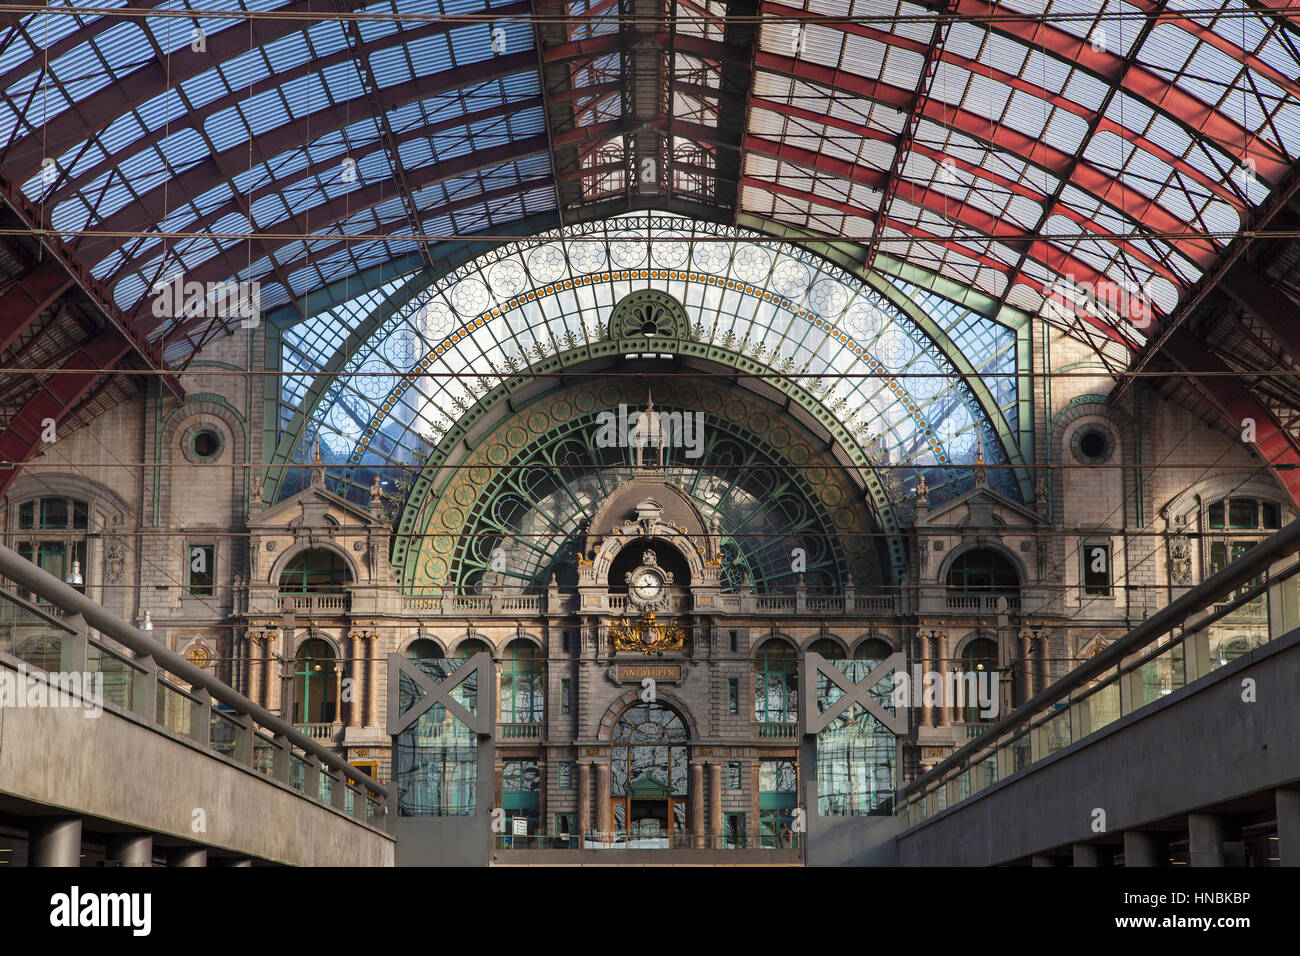 Antwerp Central Railway Station in Antwerp, Belgium. Stock Photo